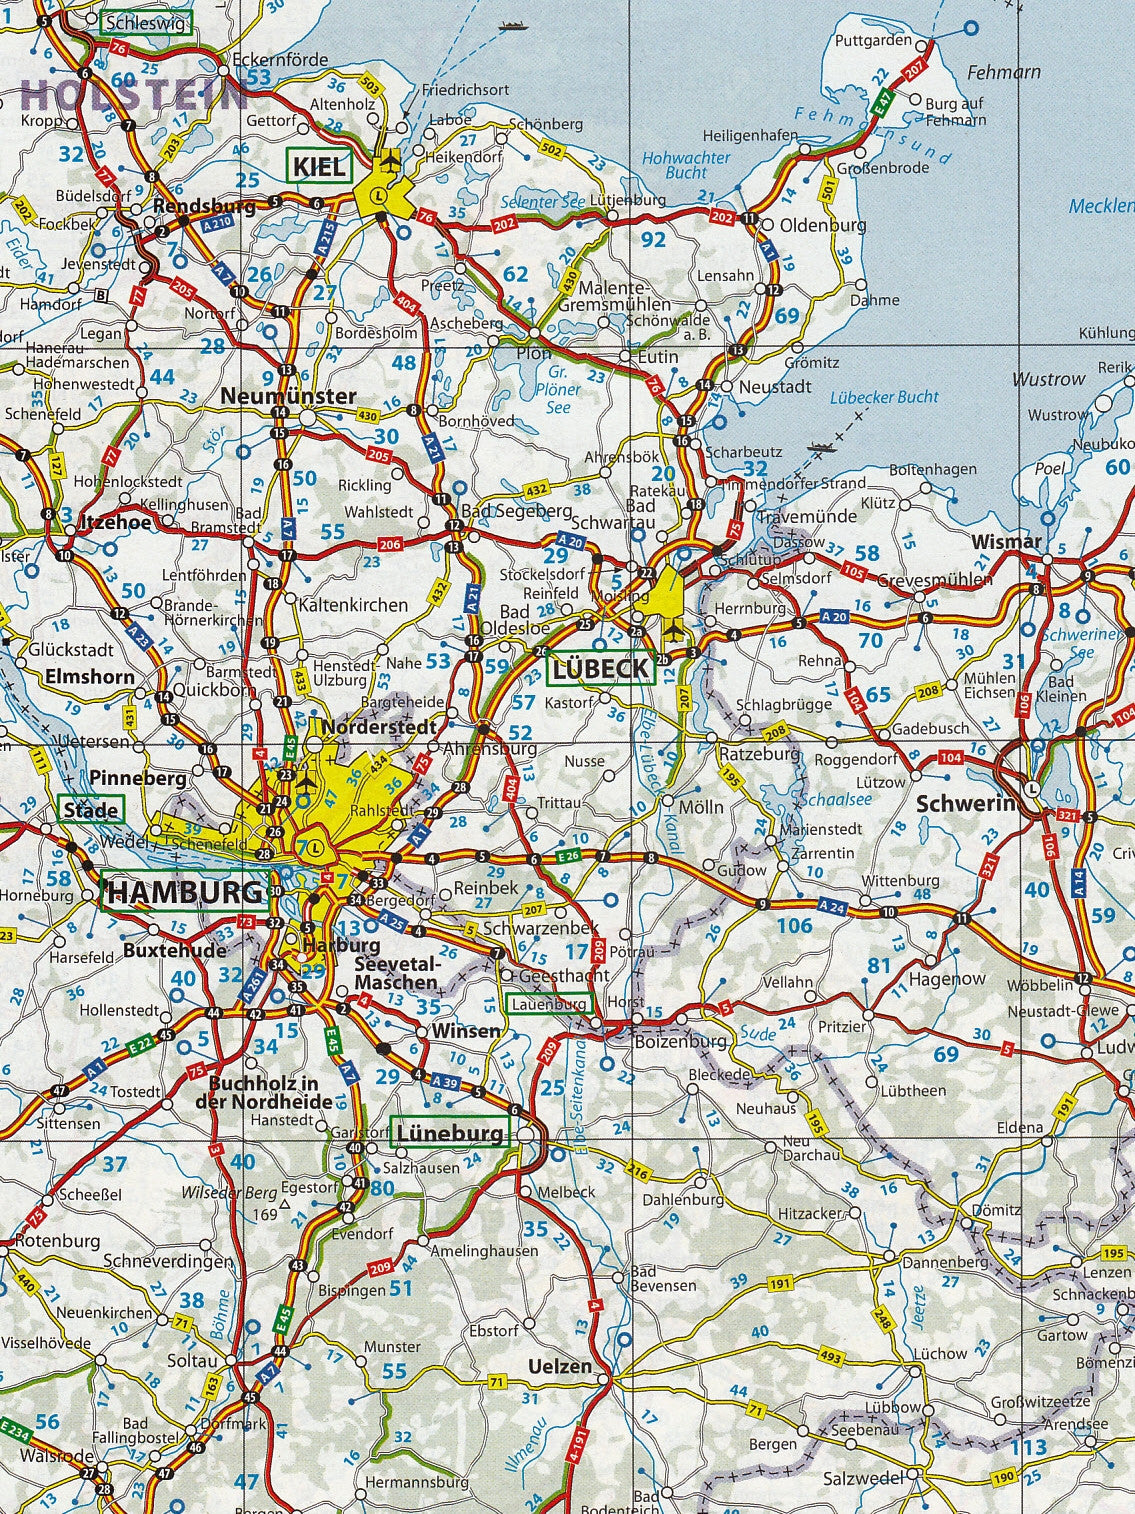 Europe 2013 Michelin Road Atlas Sample 1 ?v=1459396967